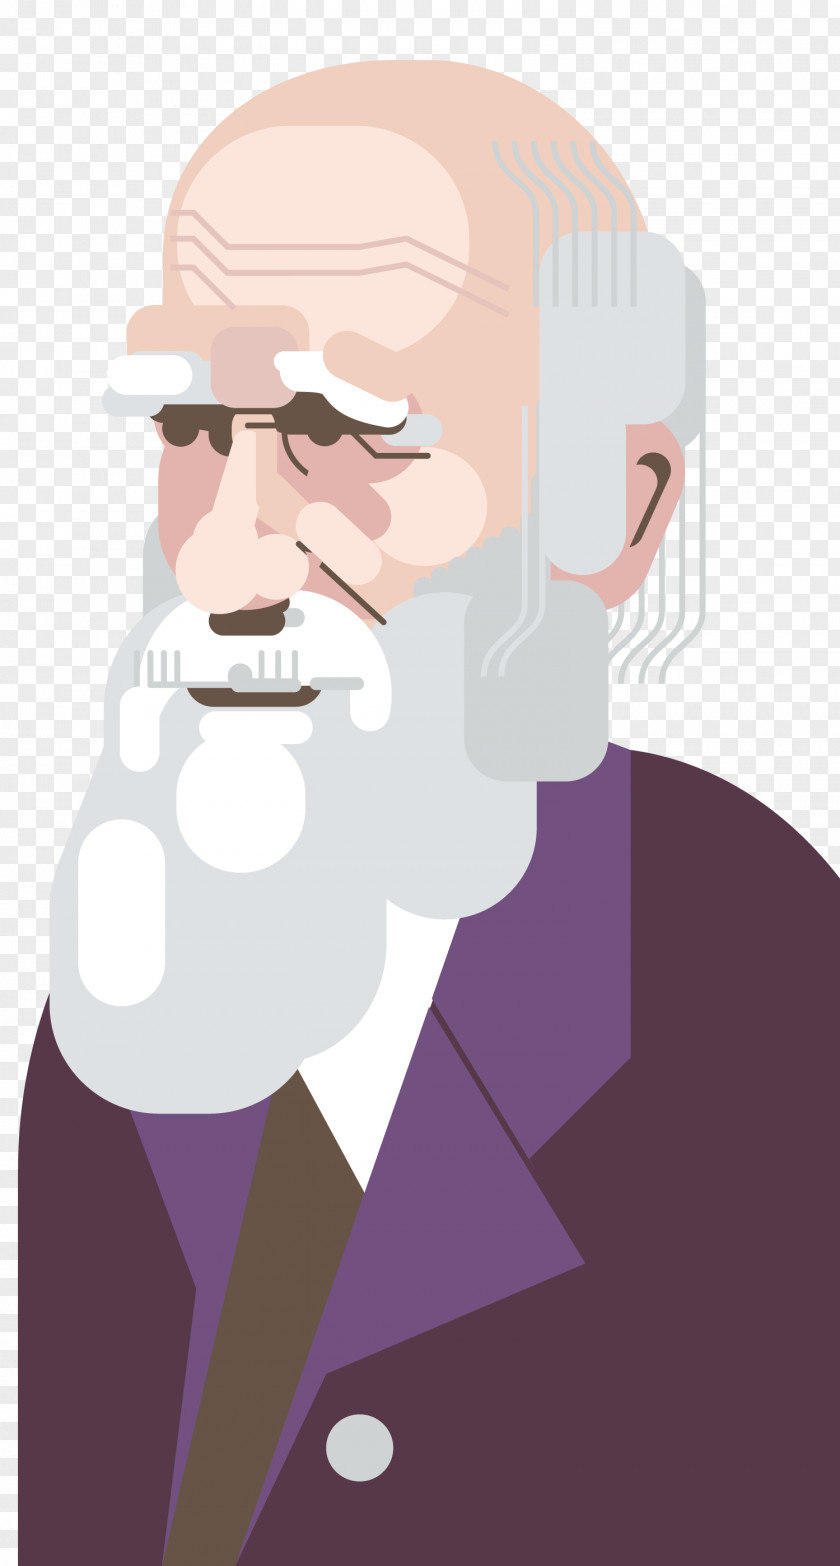 Charles Darwin Scientist Merck Group & Co. Beard Research PNG